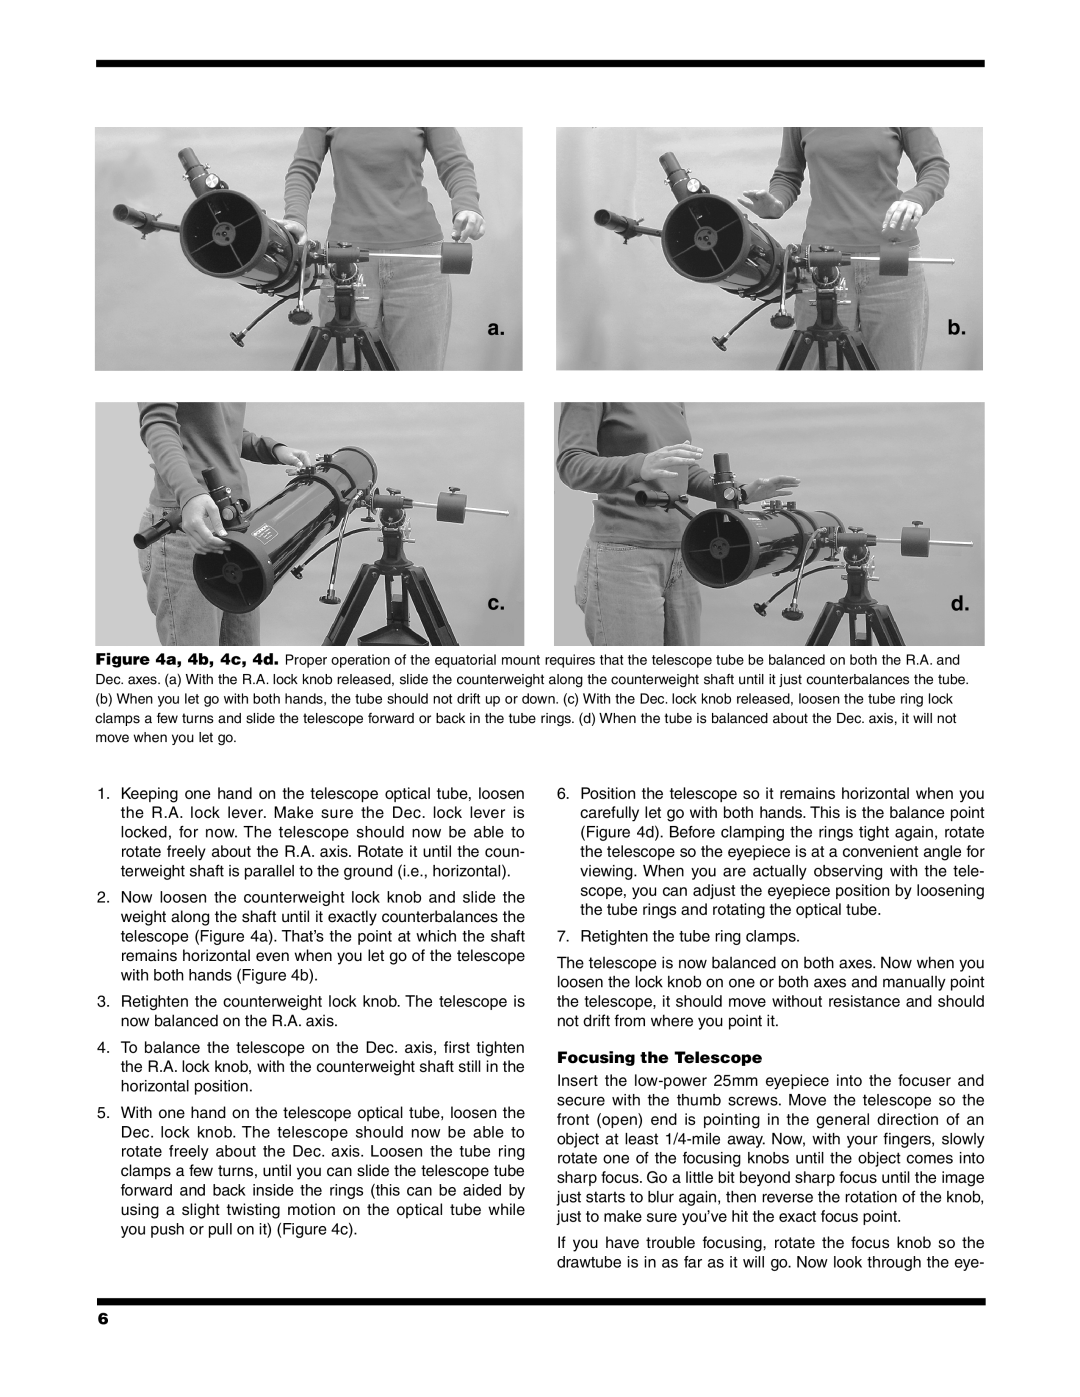 Orion 9851 instruction manual a.b c.d, Focusing the Telescope 